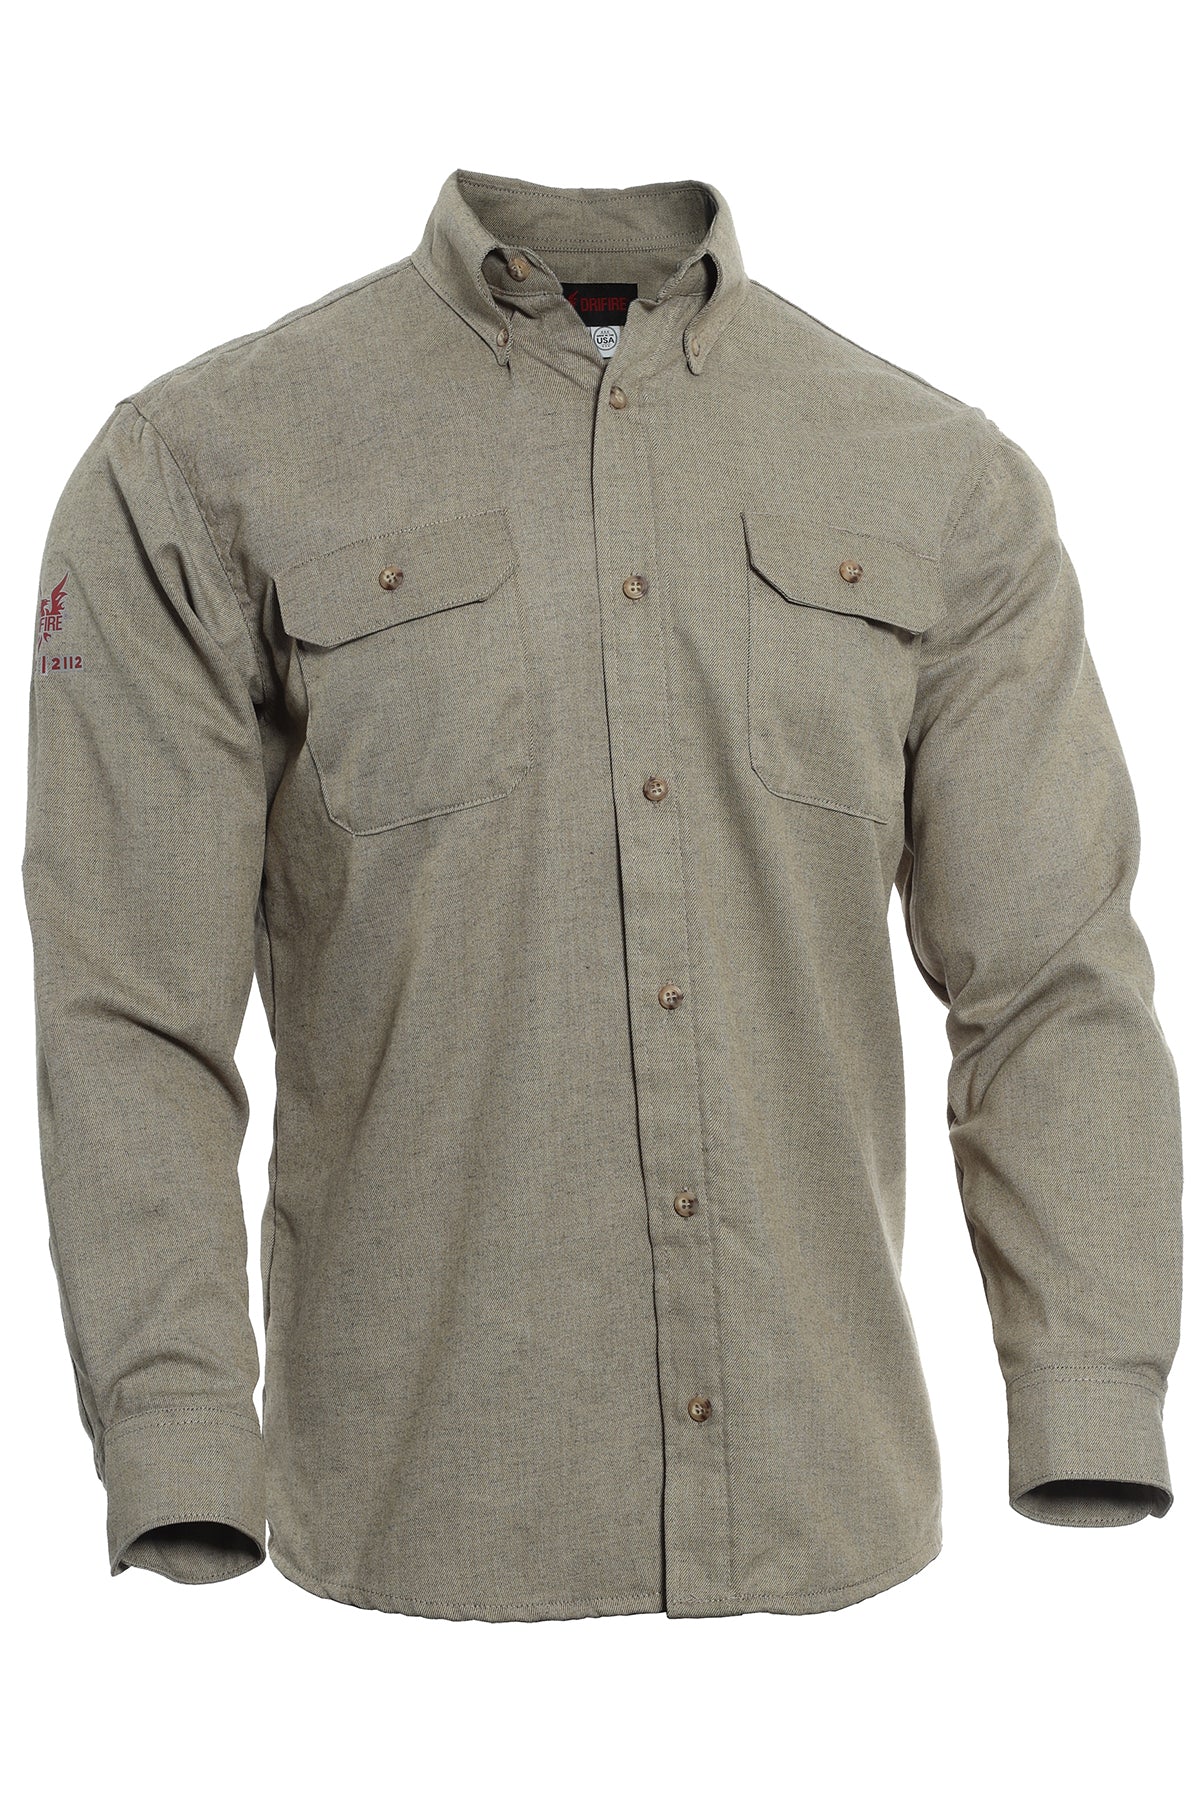 DRIFIRE Tecgen Select Tan 5.5 oz Work Shirt TCG011202